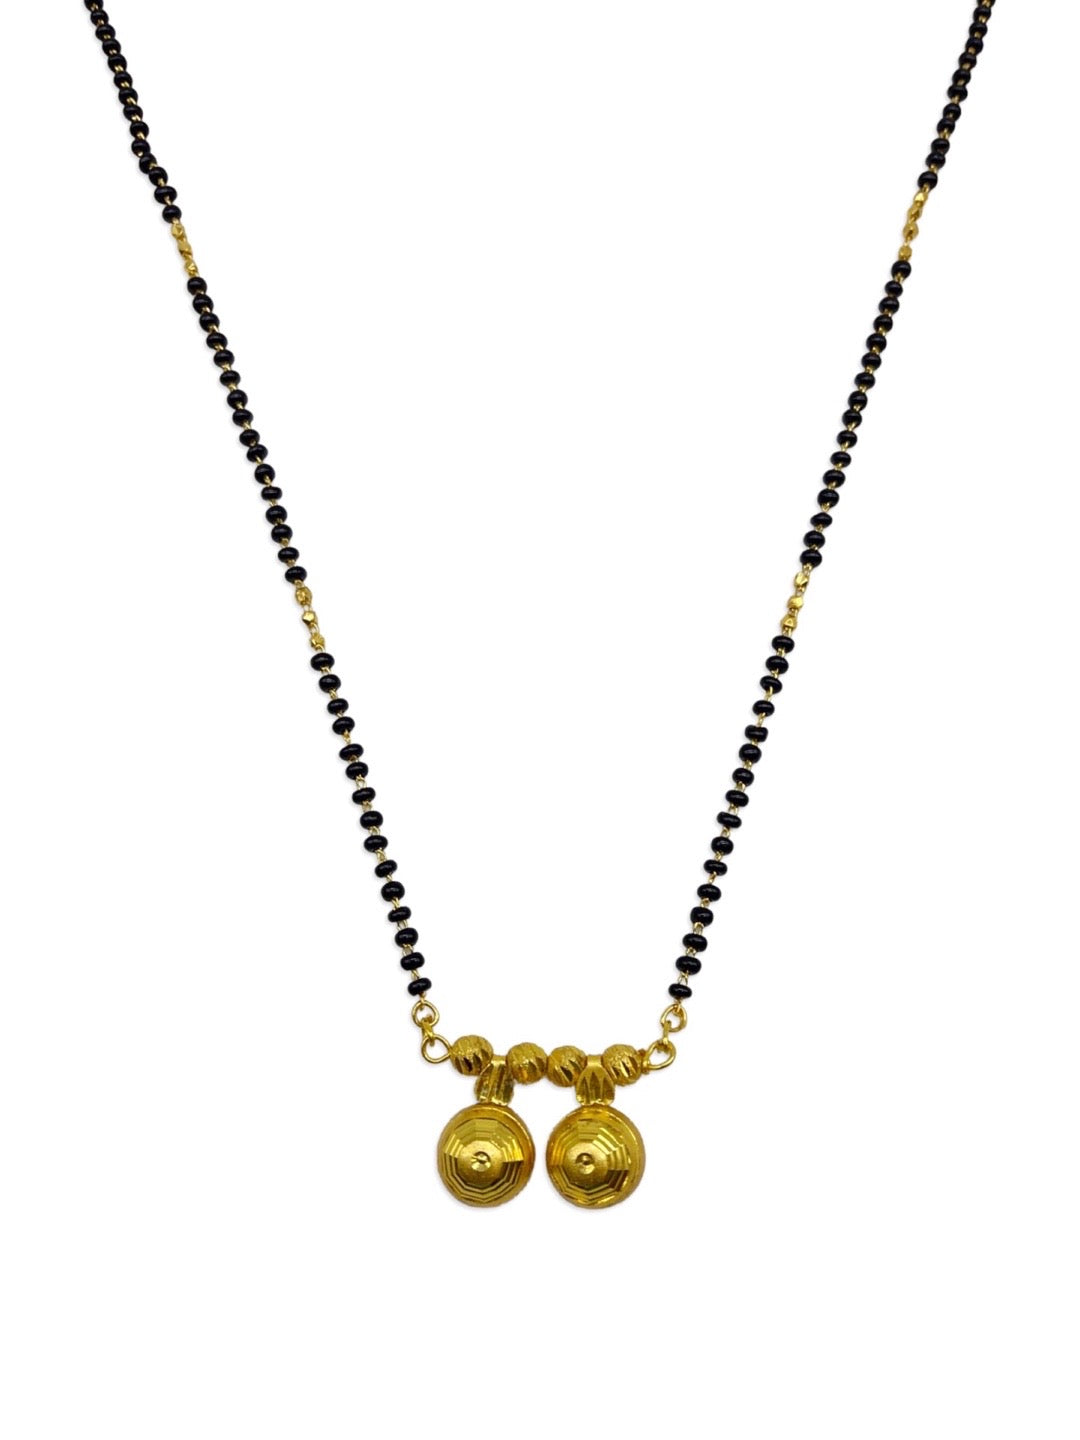 Short Mangalsutra Designs Gold Plated Latest 2 Vati Pendant Black Gold Beads Mangalsutra